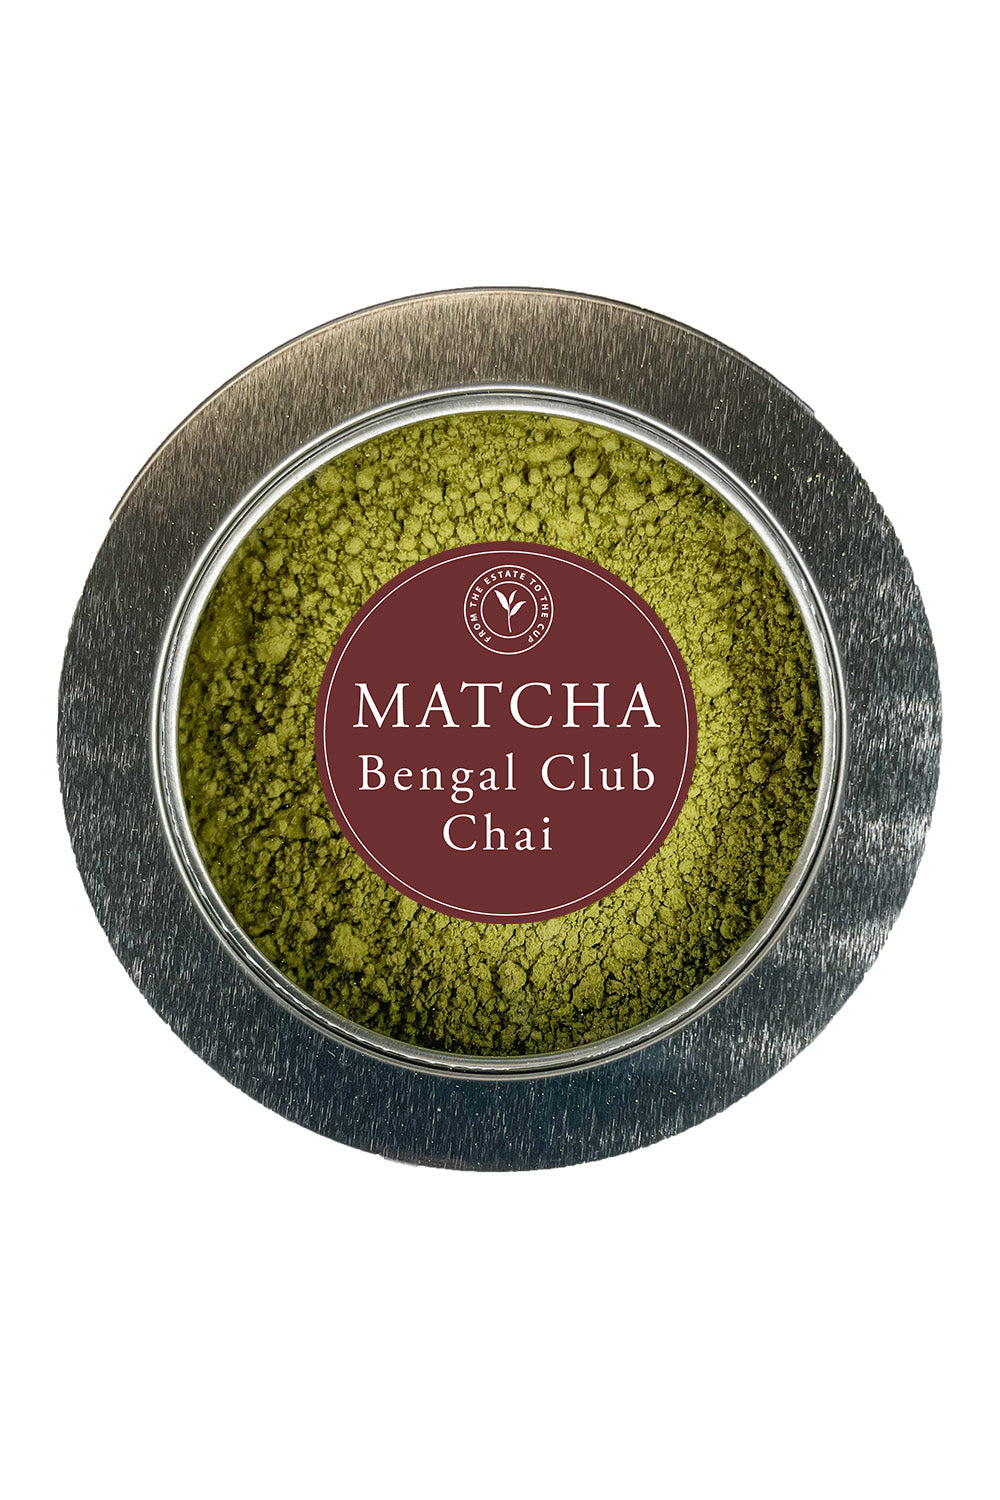 Bengal Club Chai Matcha-40g tin-Loose Leaf Tea-High Teas